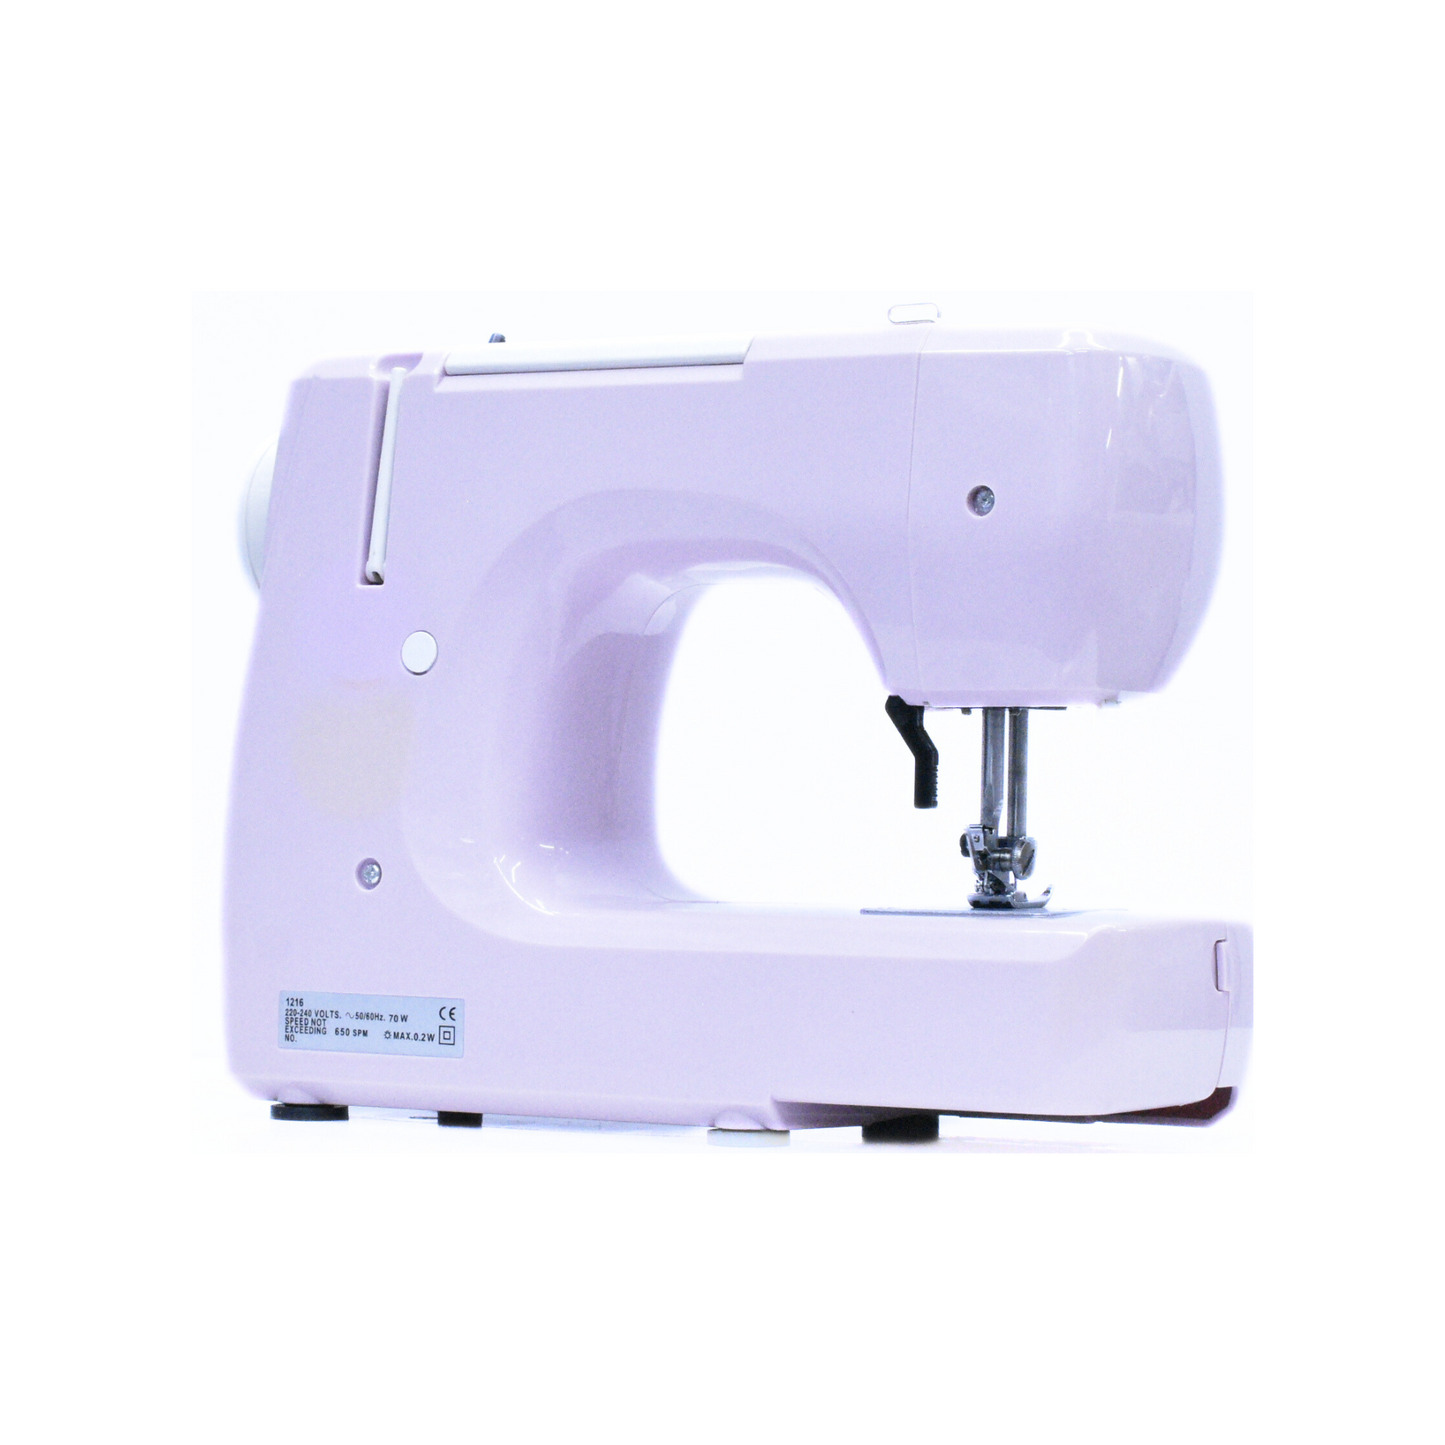 Laiba 1216 sewing machine